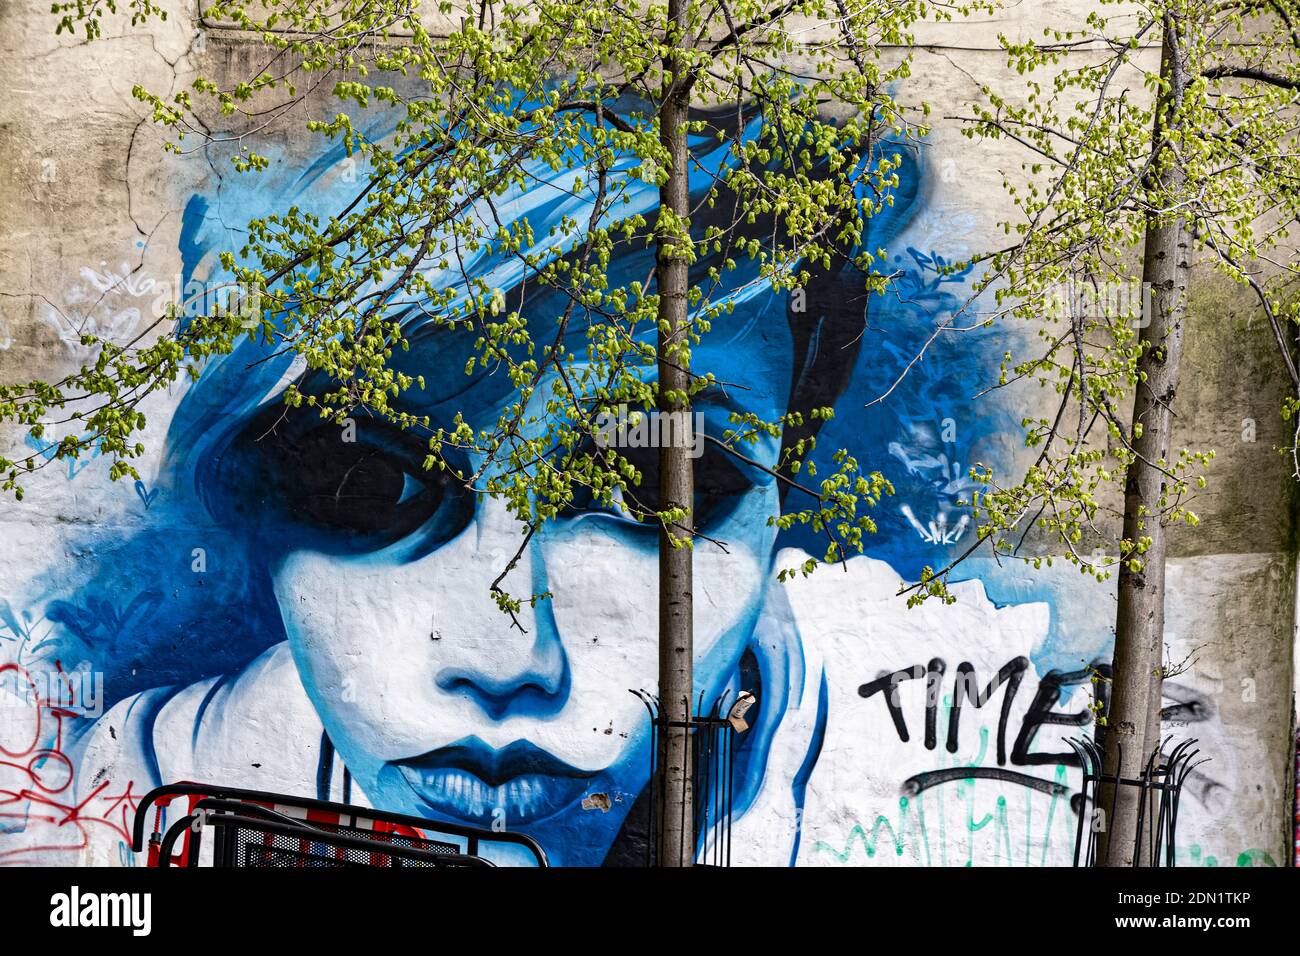 Belfast, Irlande du Nord. 30 avril 2016. Graffiti et Street art le 30 avril 2016 à Belfast, Irlande du Nord, Royaume-Uni. Banque D'Images